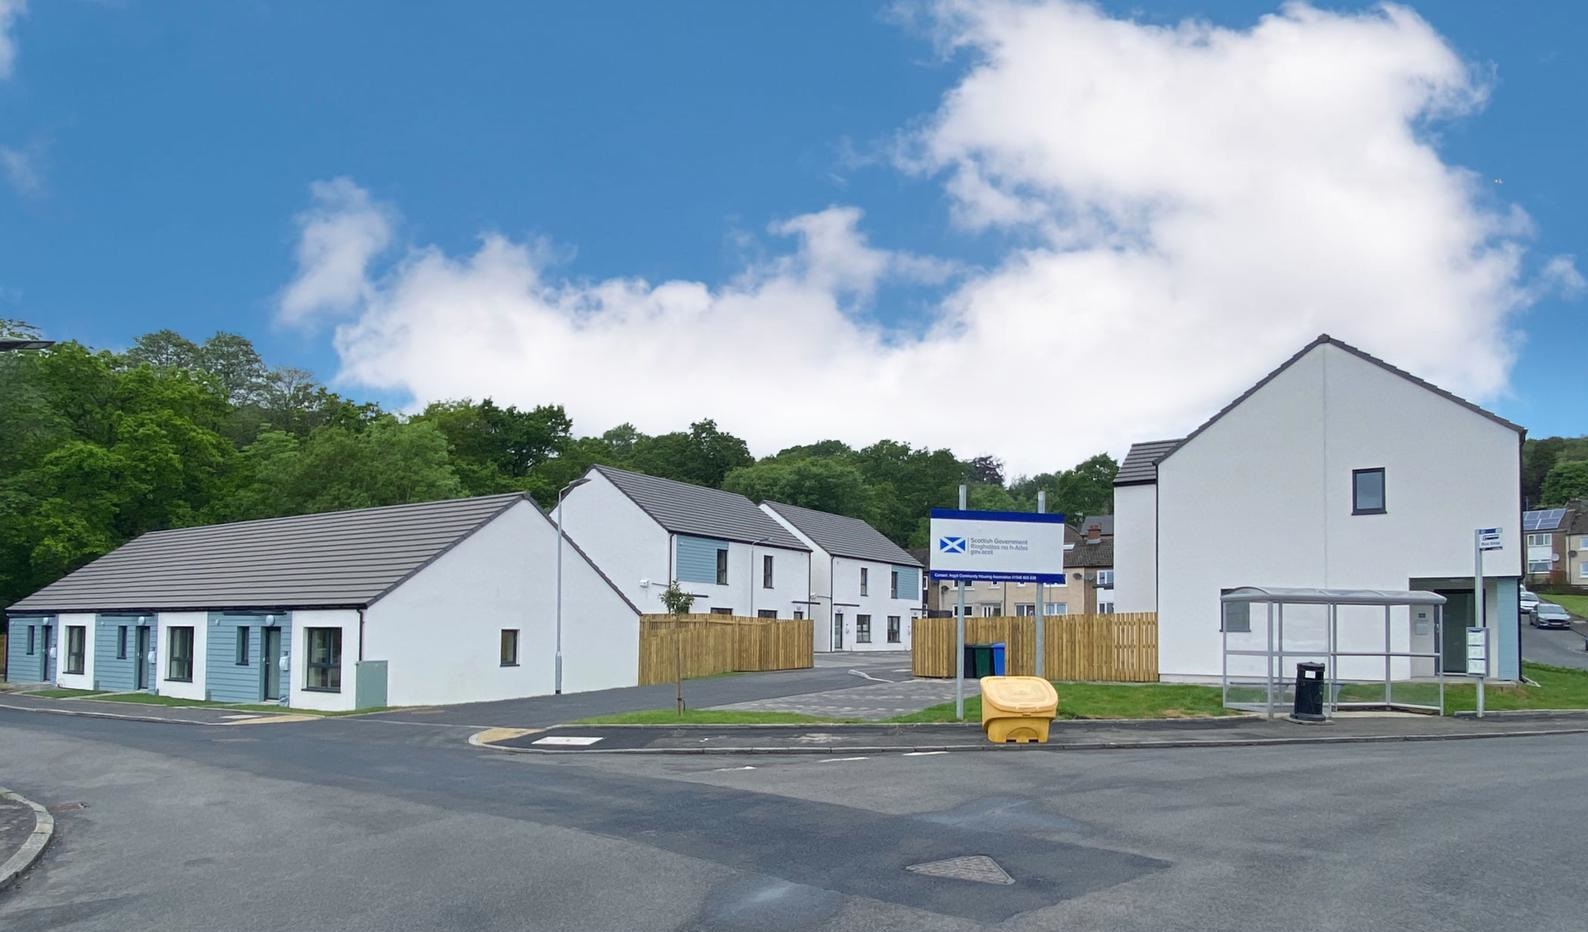 Housing association completes Passivhaus development in Garelochhead